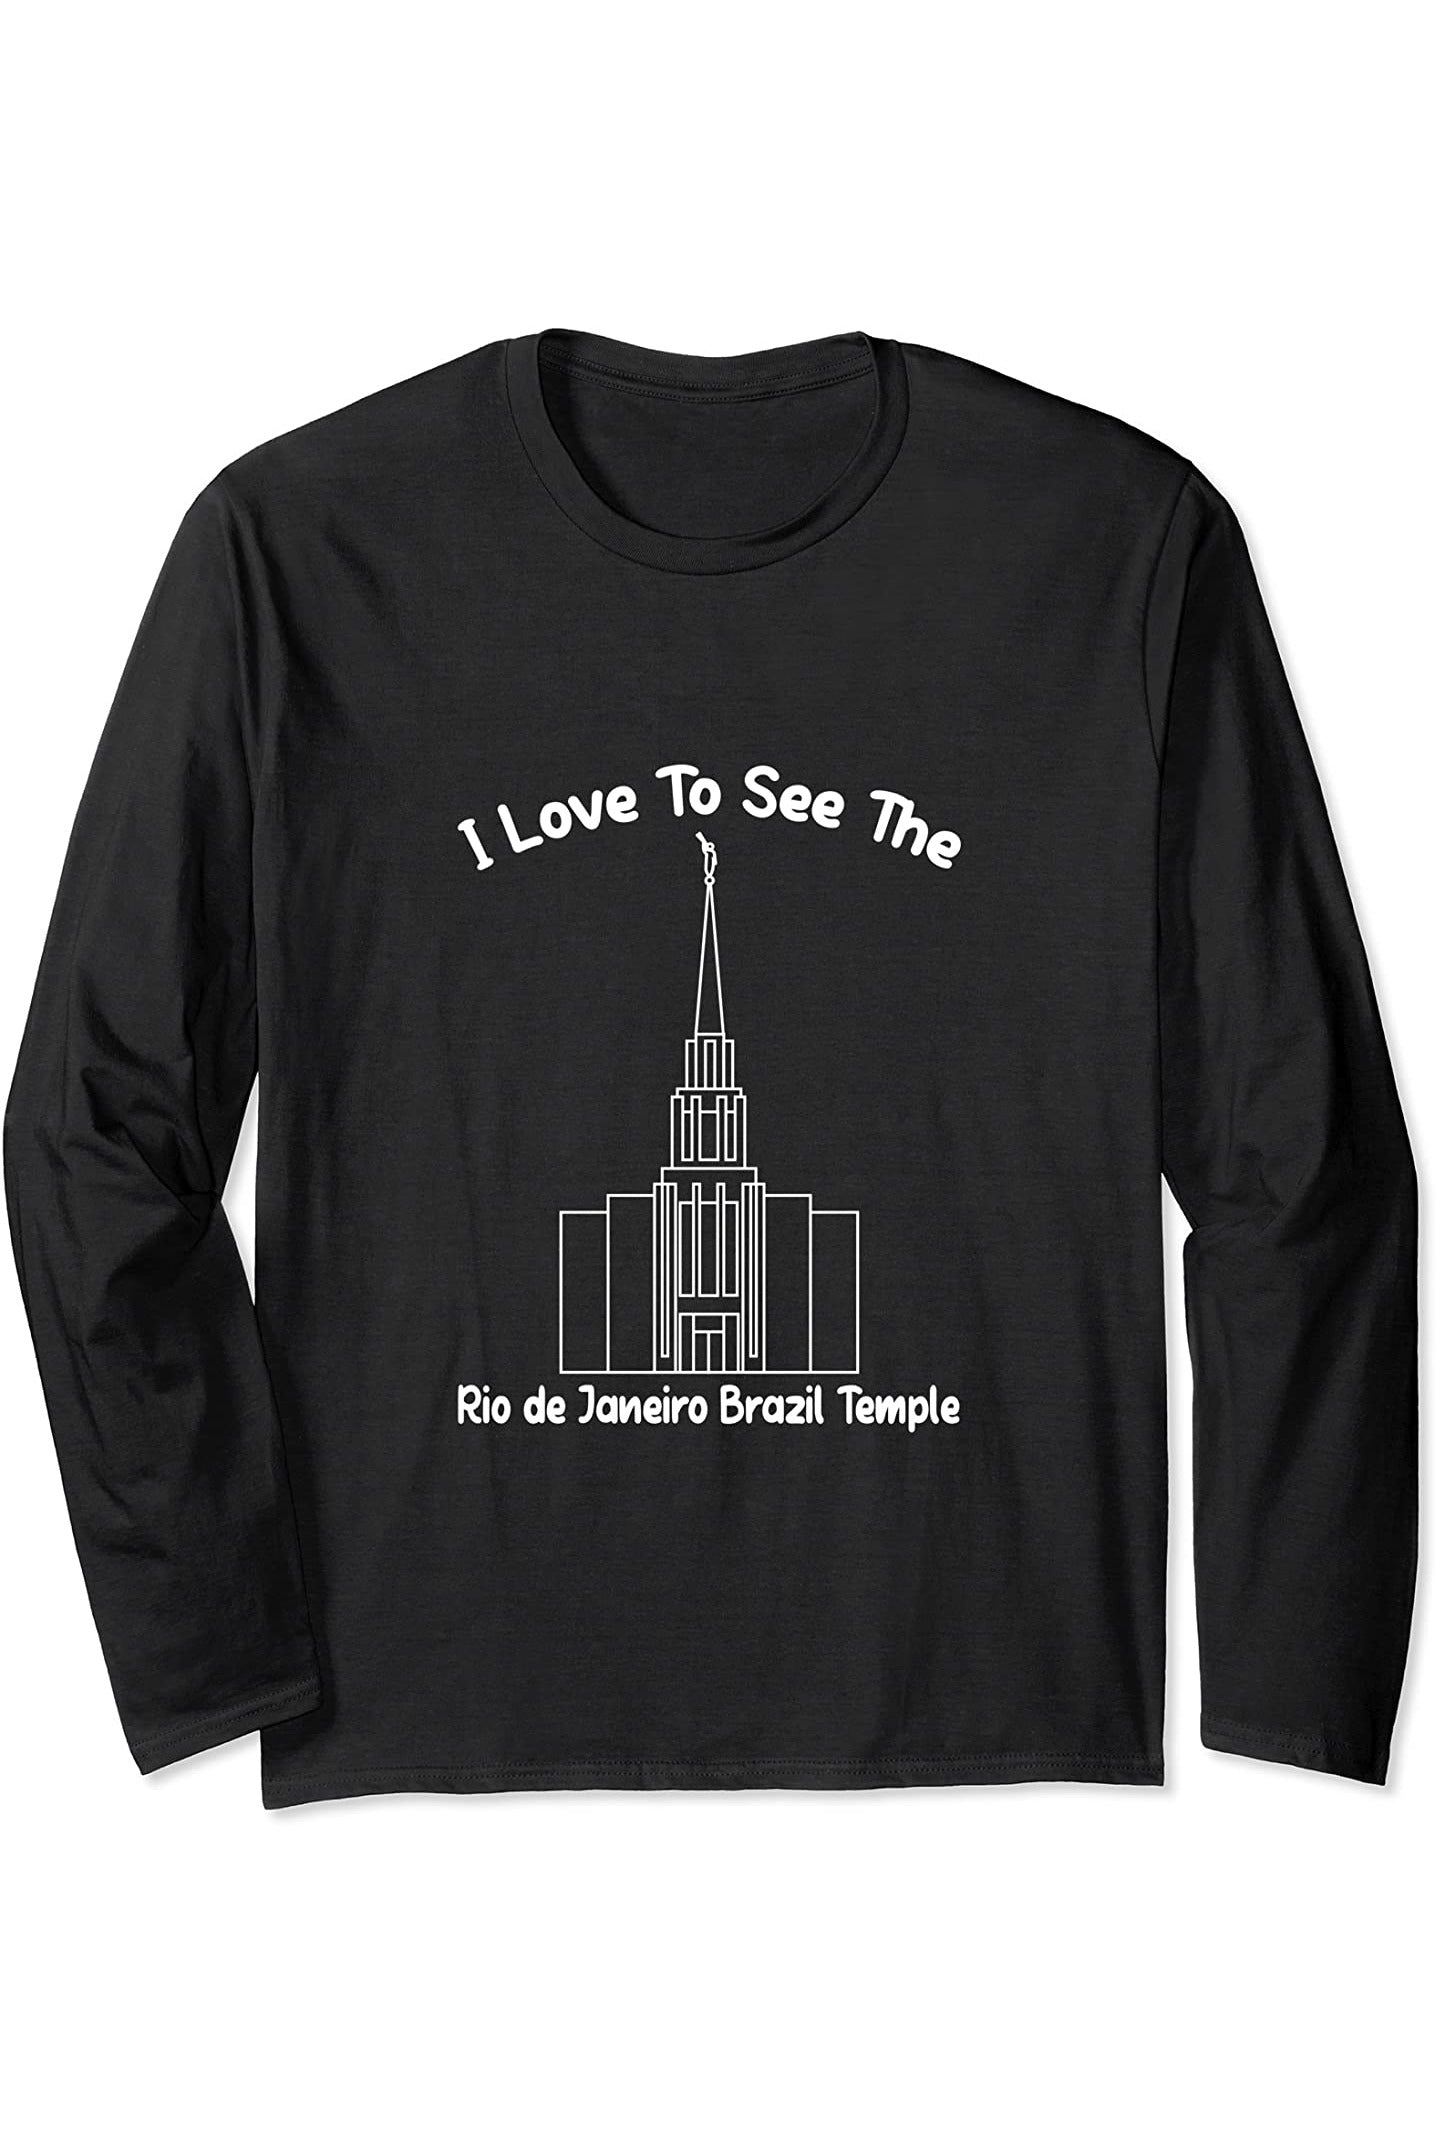 Rio de Janeiro Brazil Temple Long Sleeve T-Shirt - Primary Style (English) US